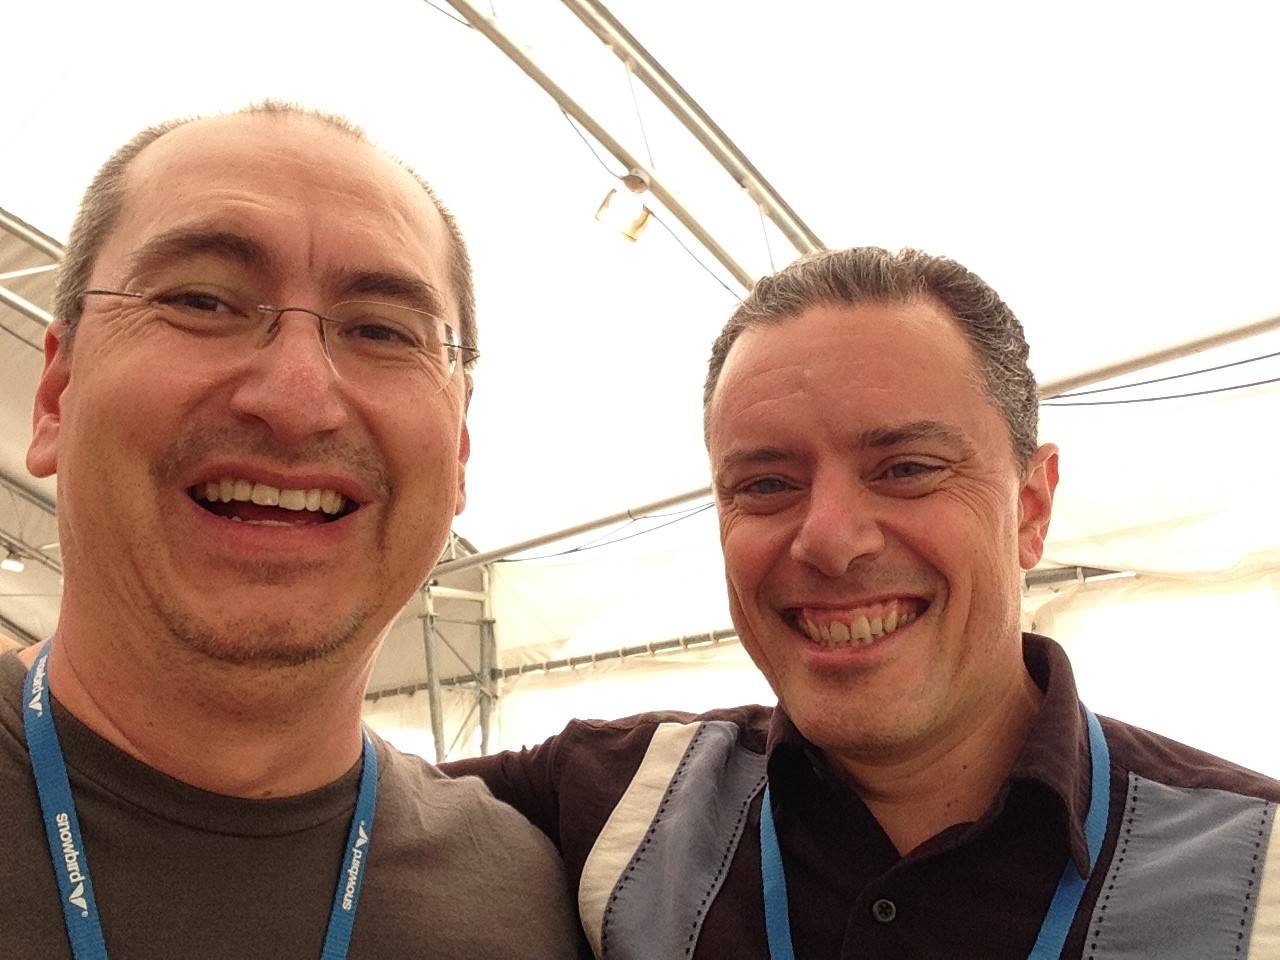 DiGRA 2014 selfie with Michael Mateas